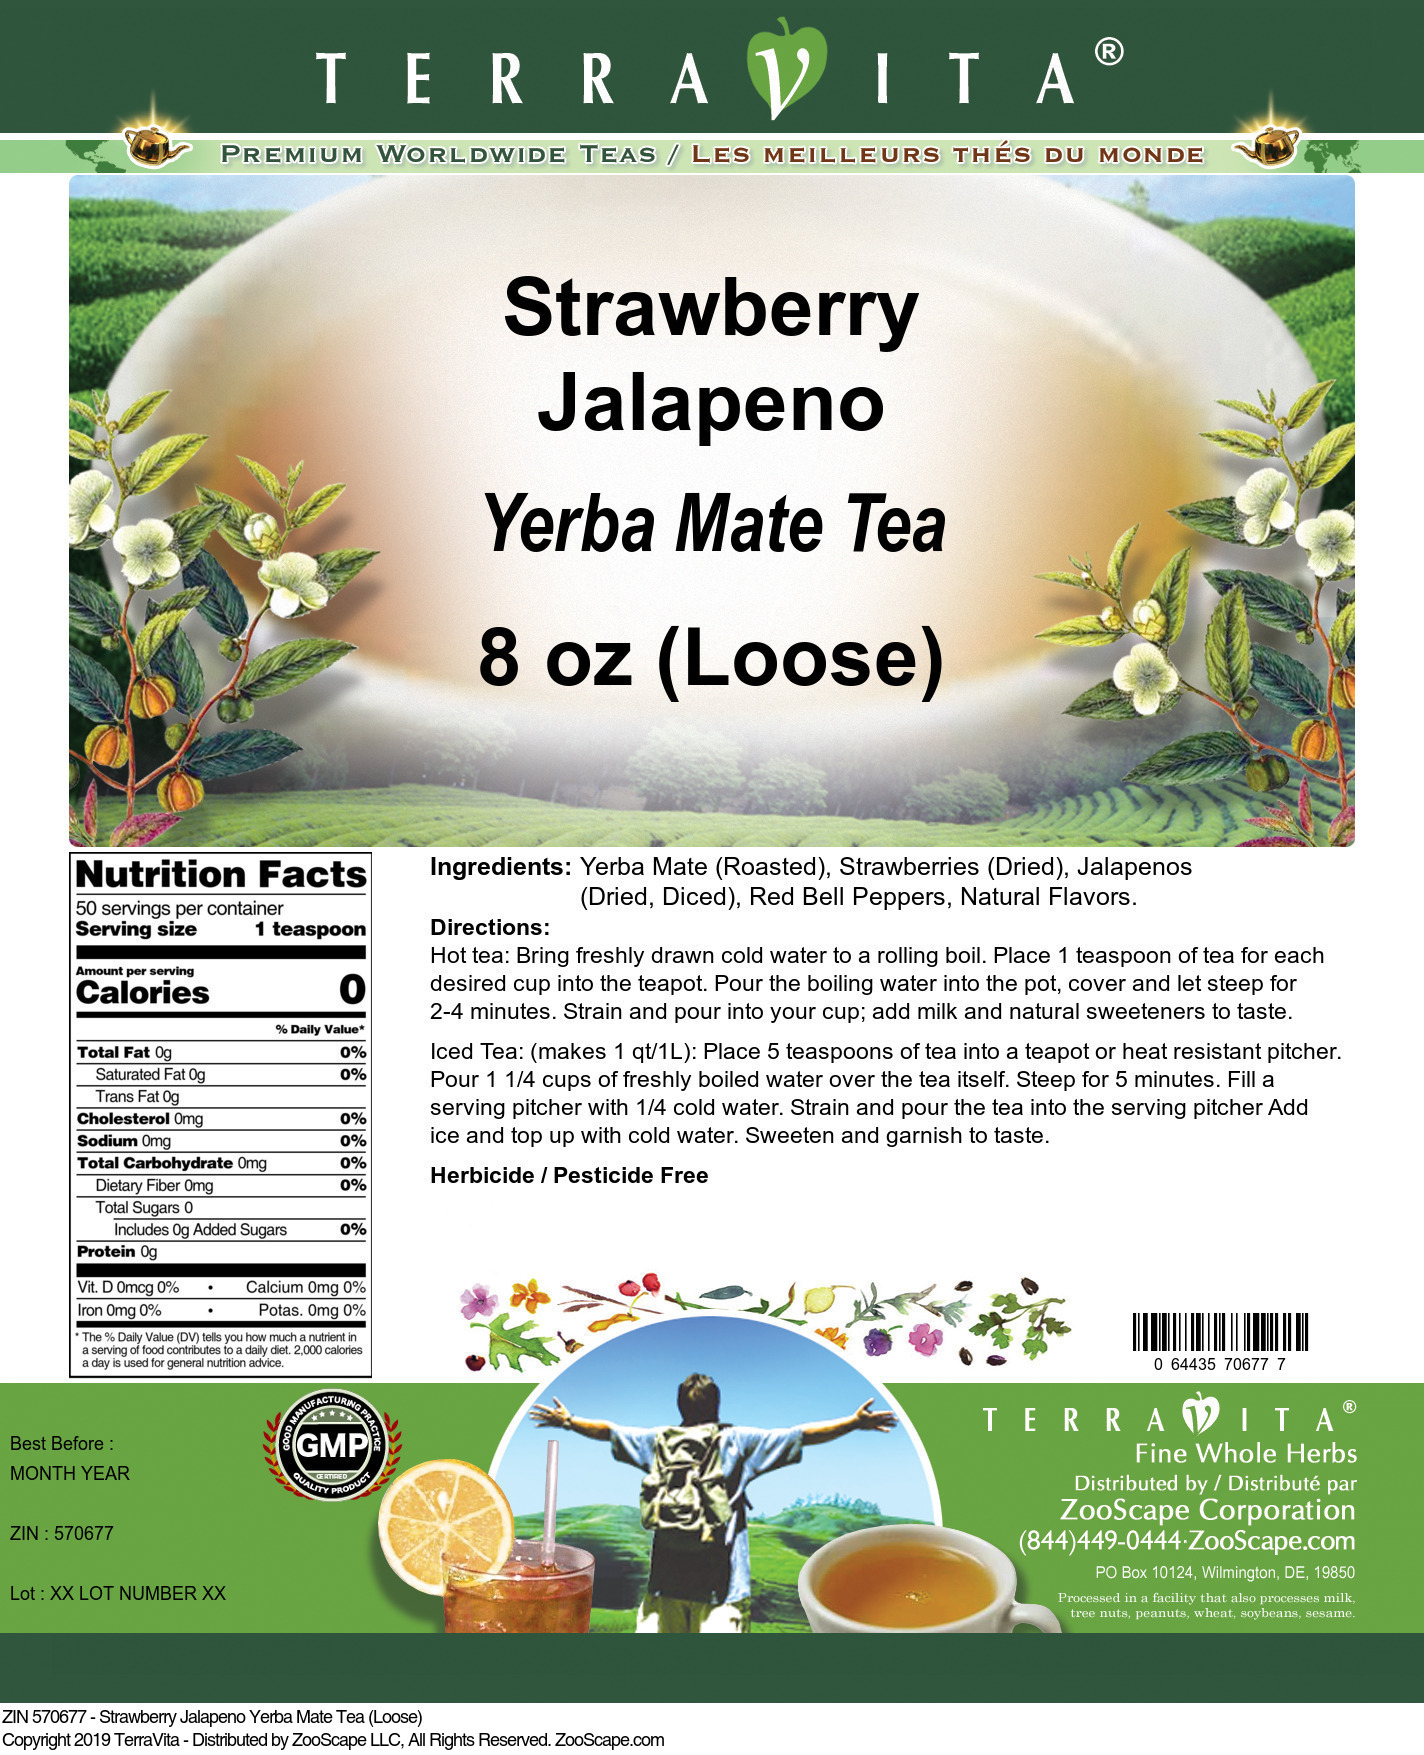 Strawberry Jalapeno Yerba Mate Tea (Loose) - Label